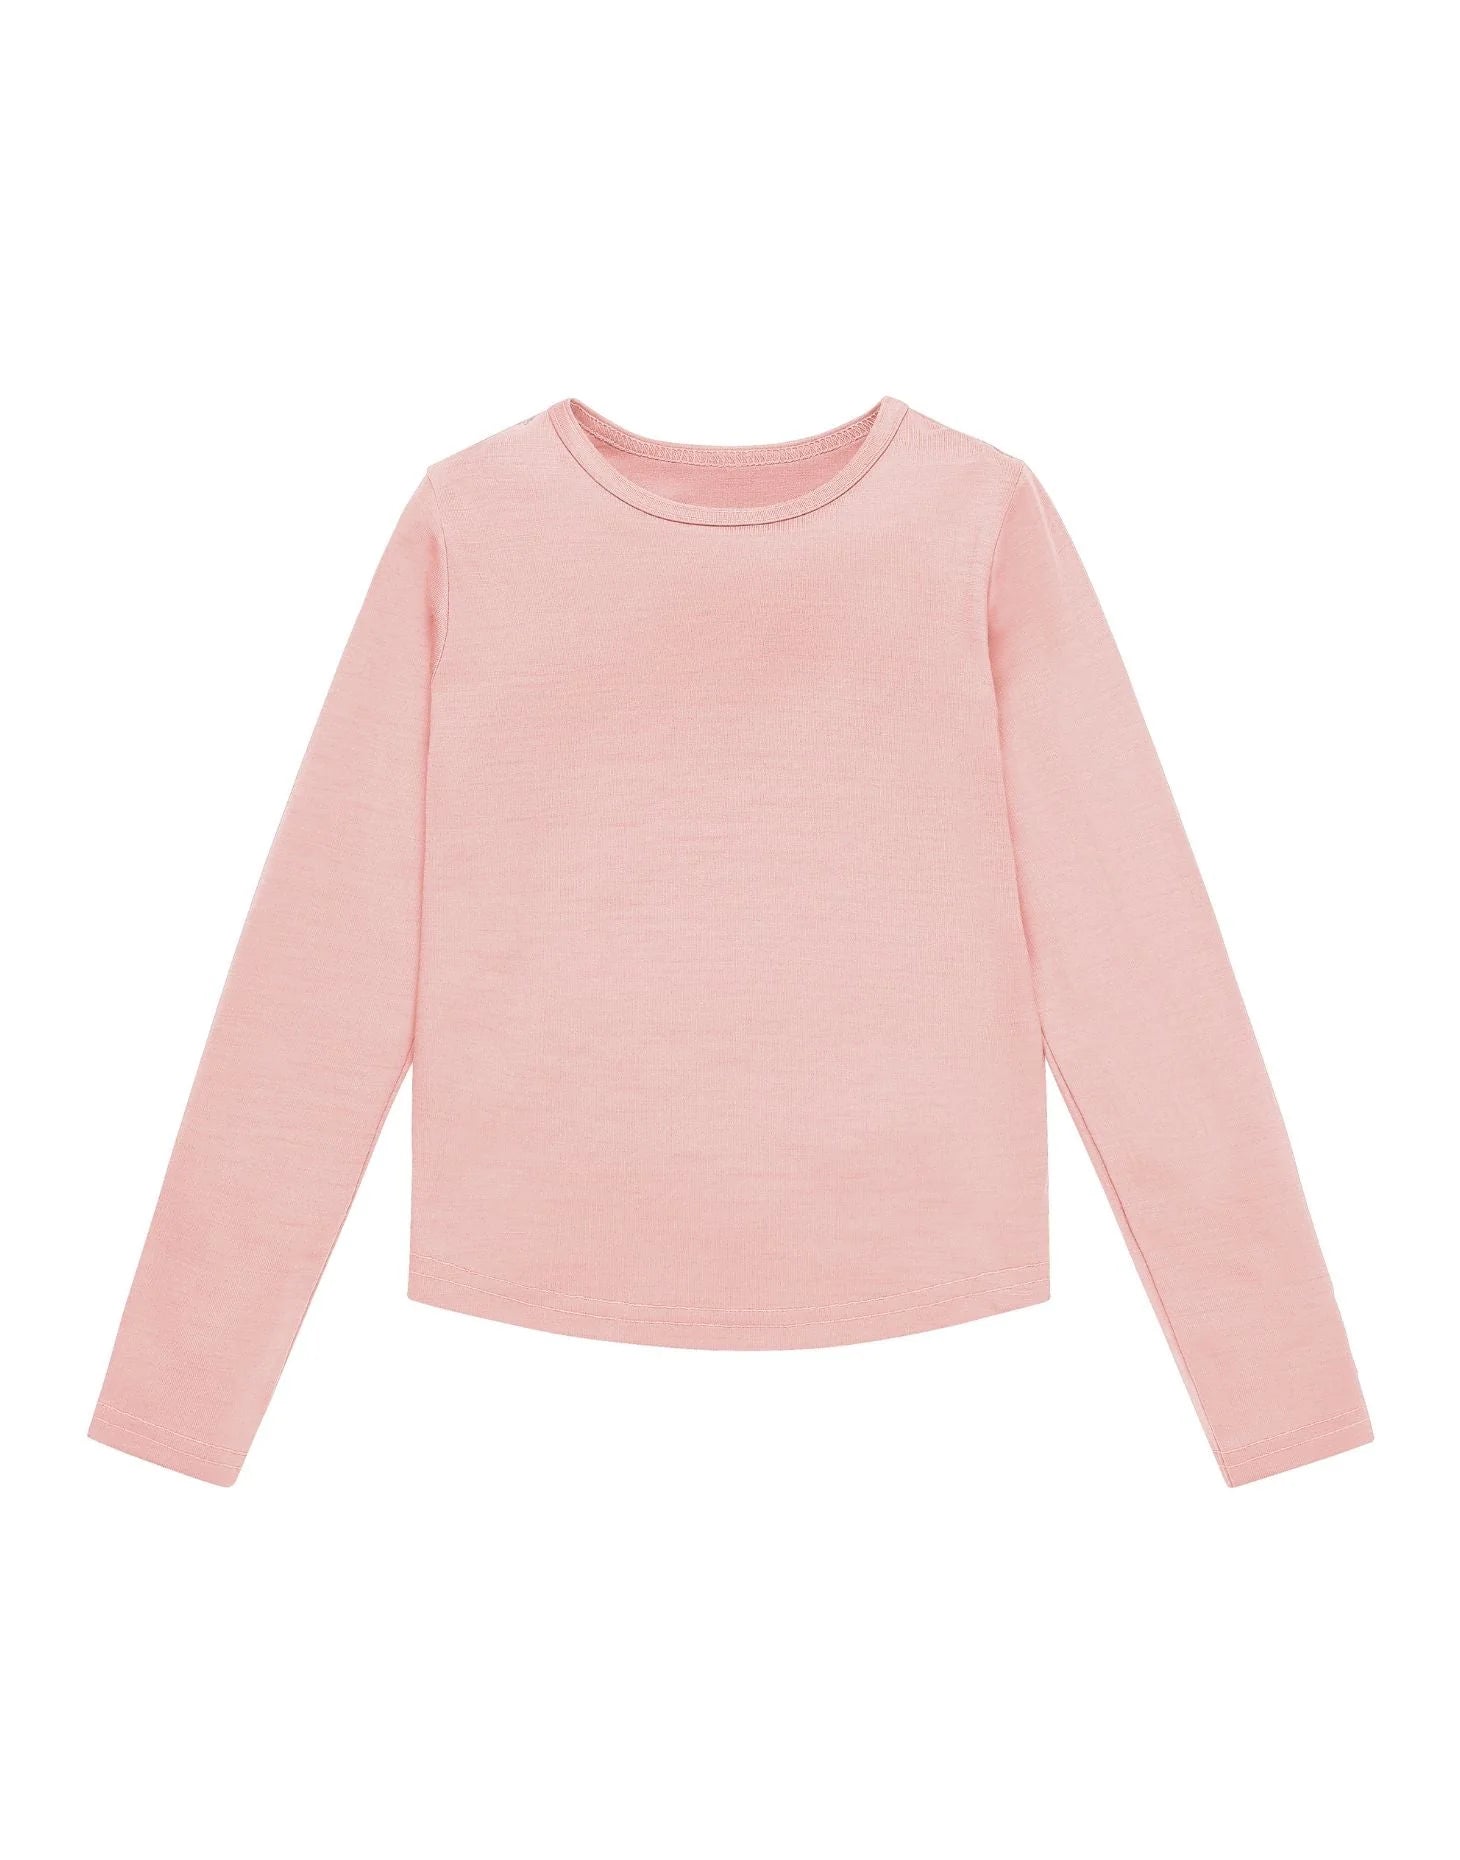 Smalls Merino Long Sleeve Top  | Pink Peach Blossom